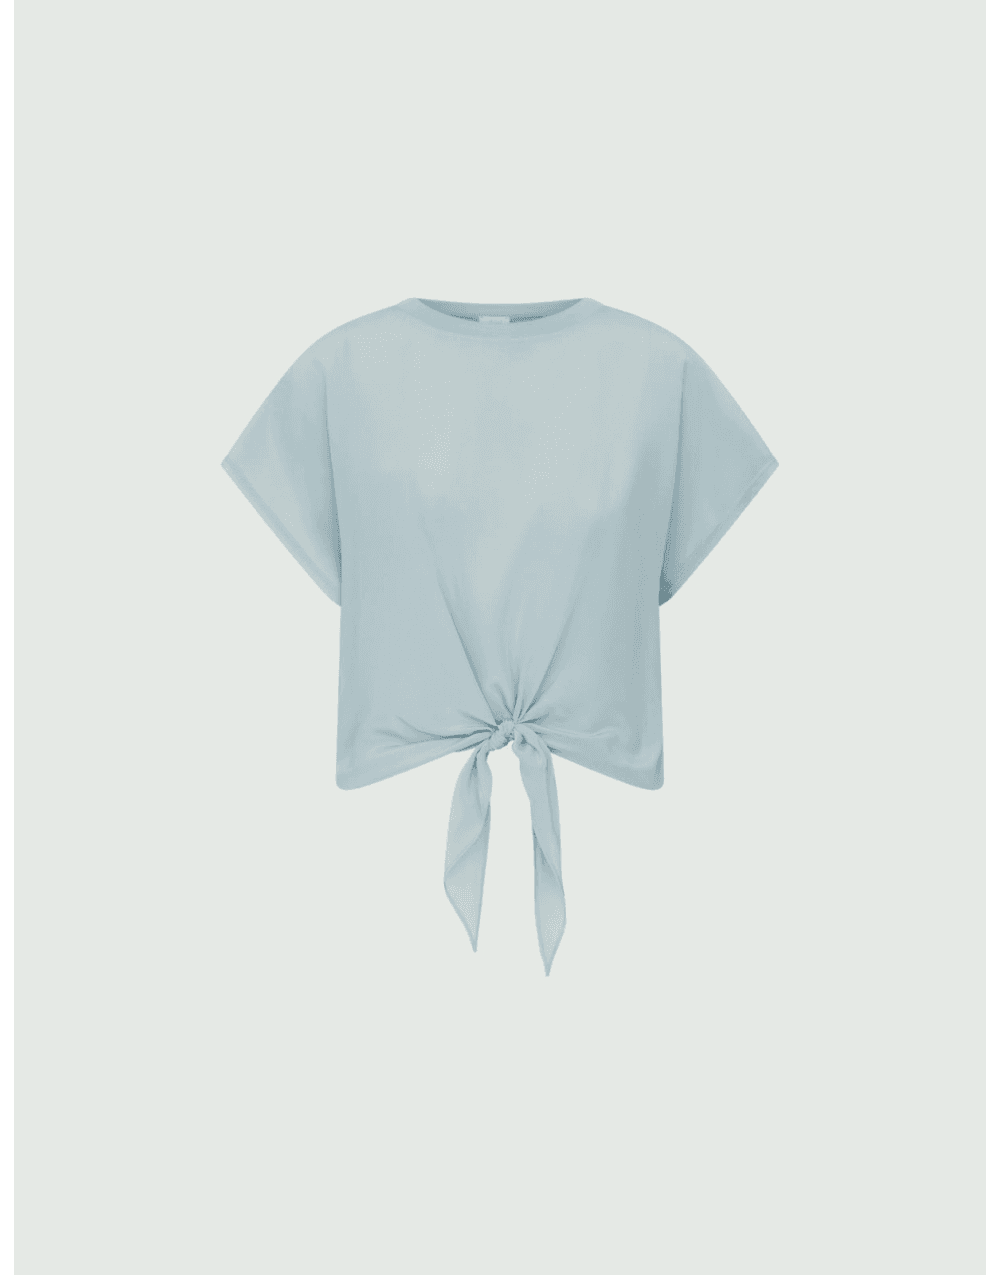 Marella Marella Agostin Detail Cap Sleeve Silk Top Size: M, Col: Sky Blue